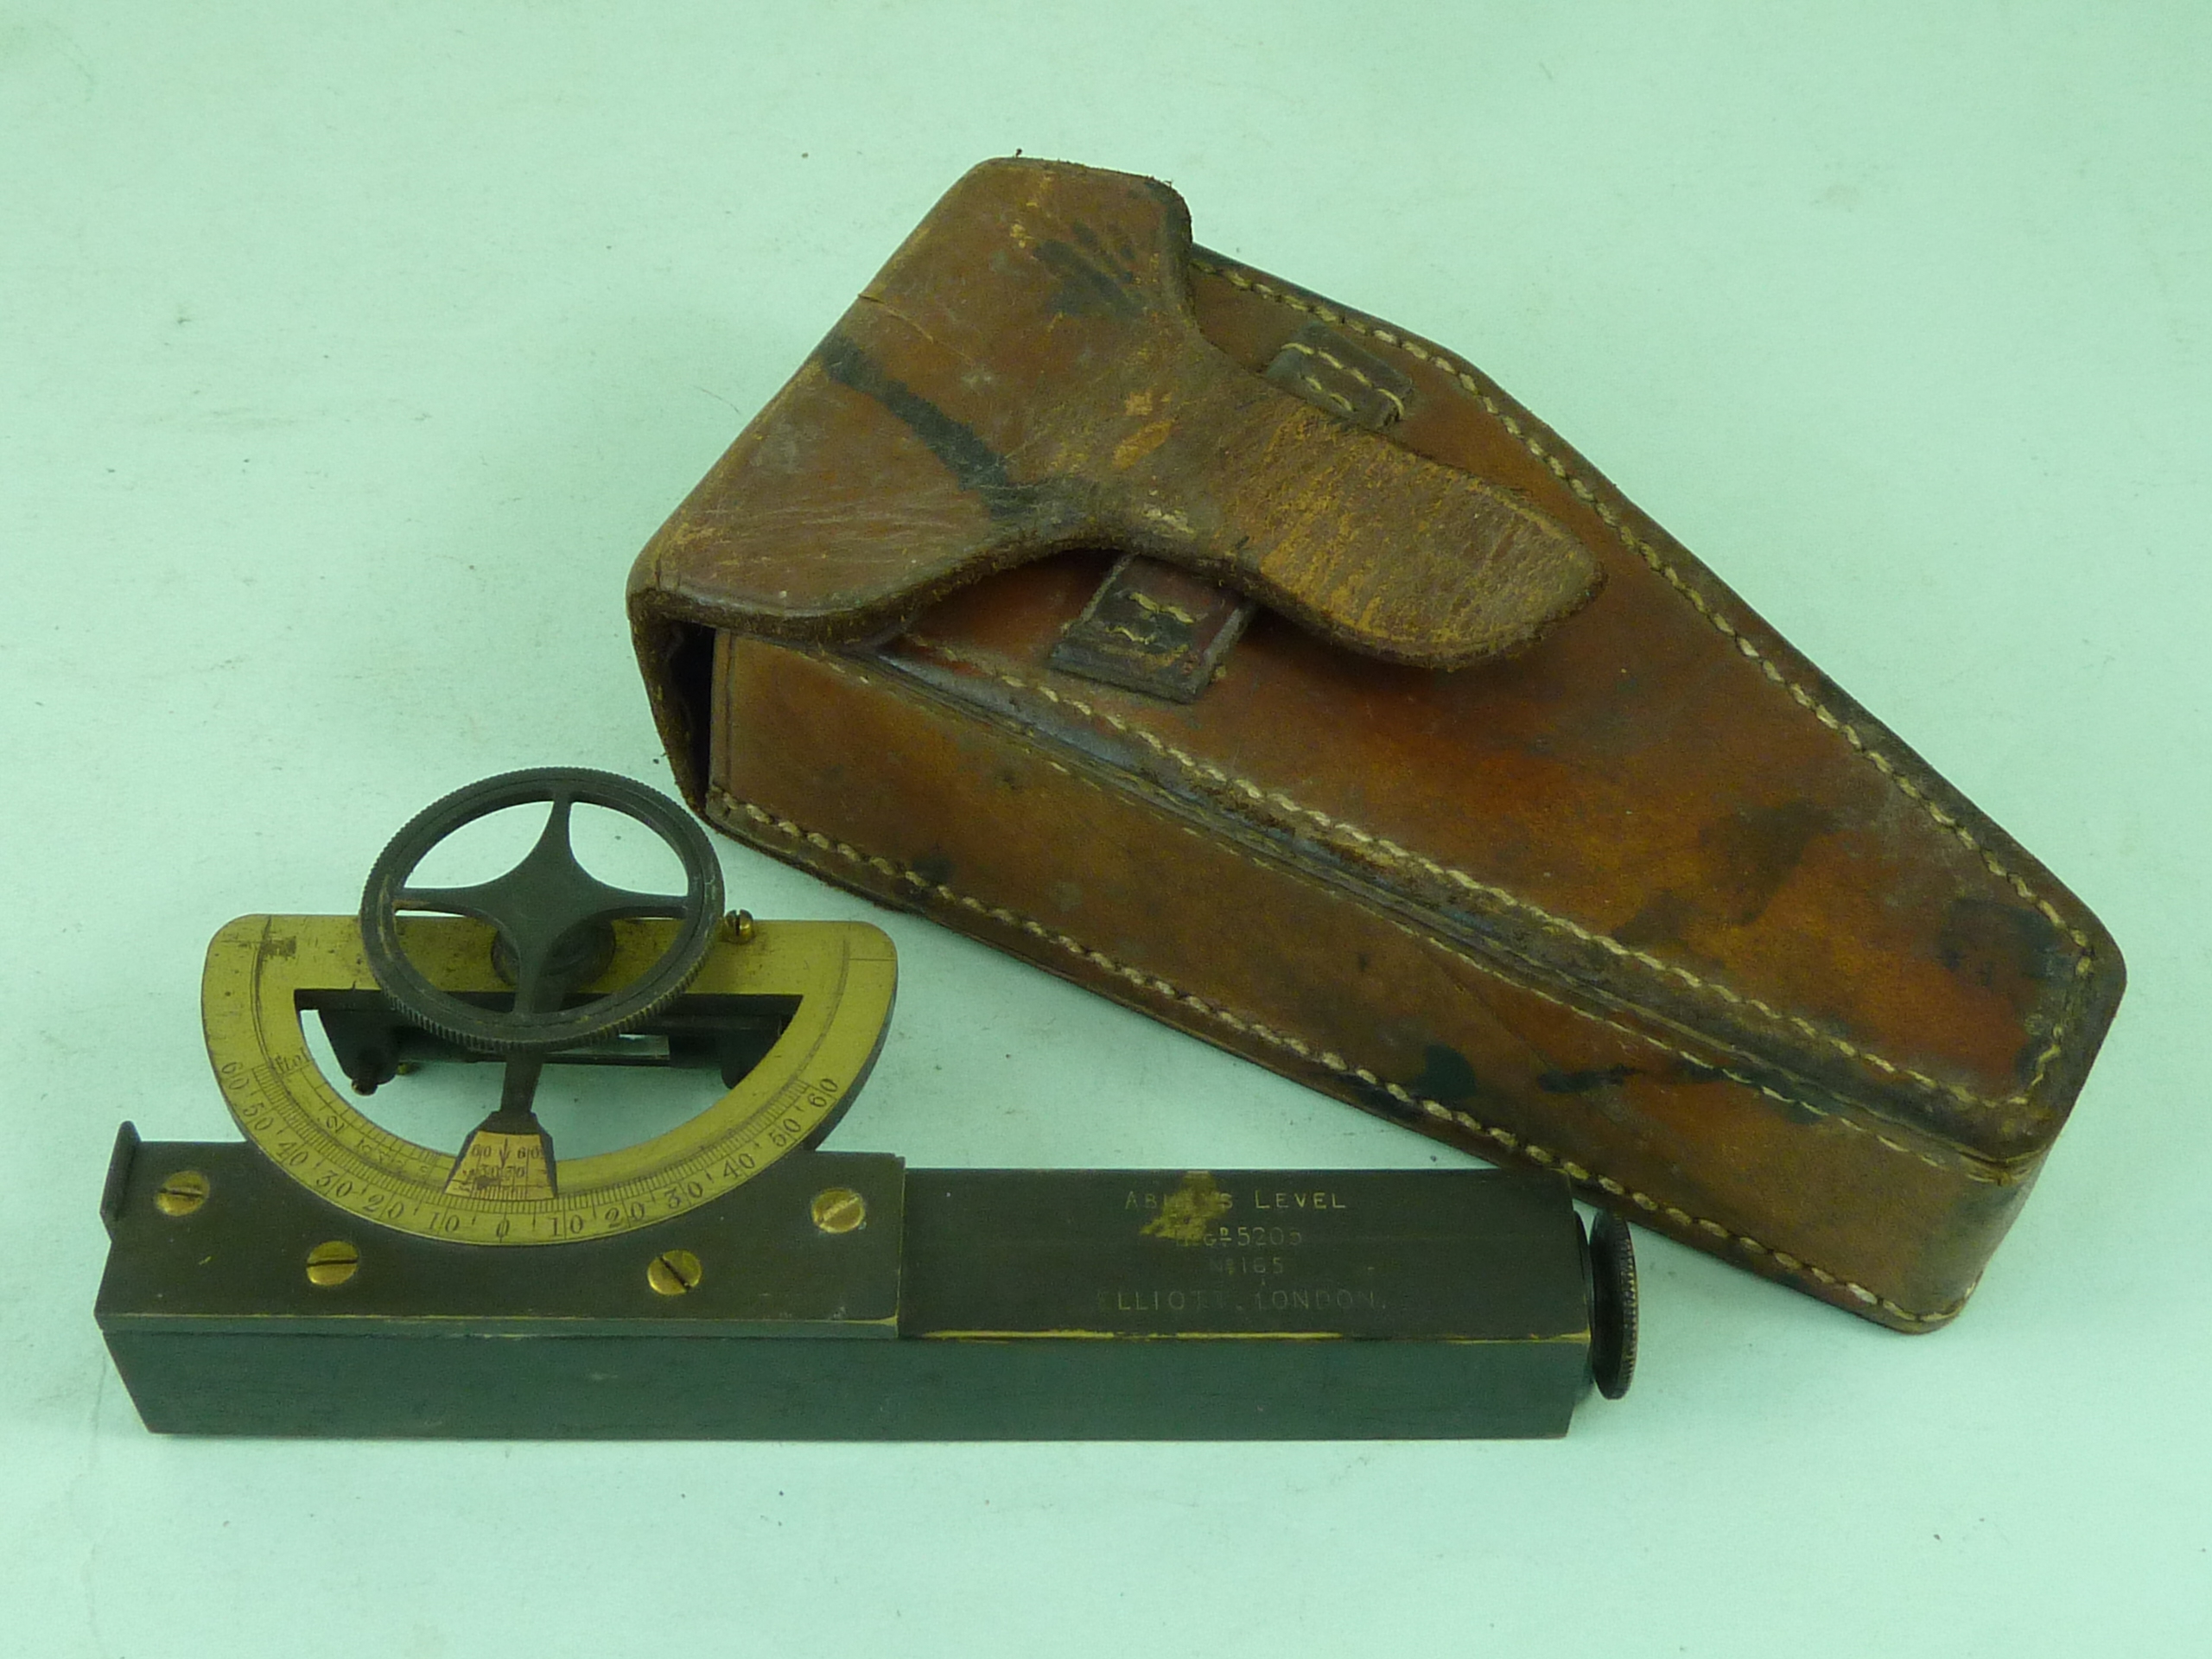 Elliott London Abney Level Clinometer Inclinometer Sight Antique ...